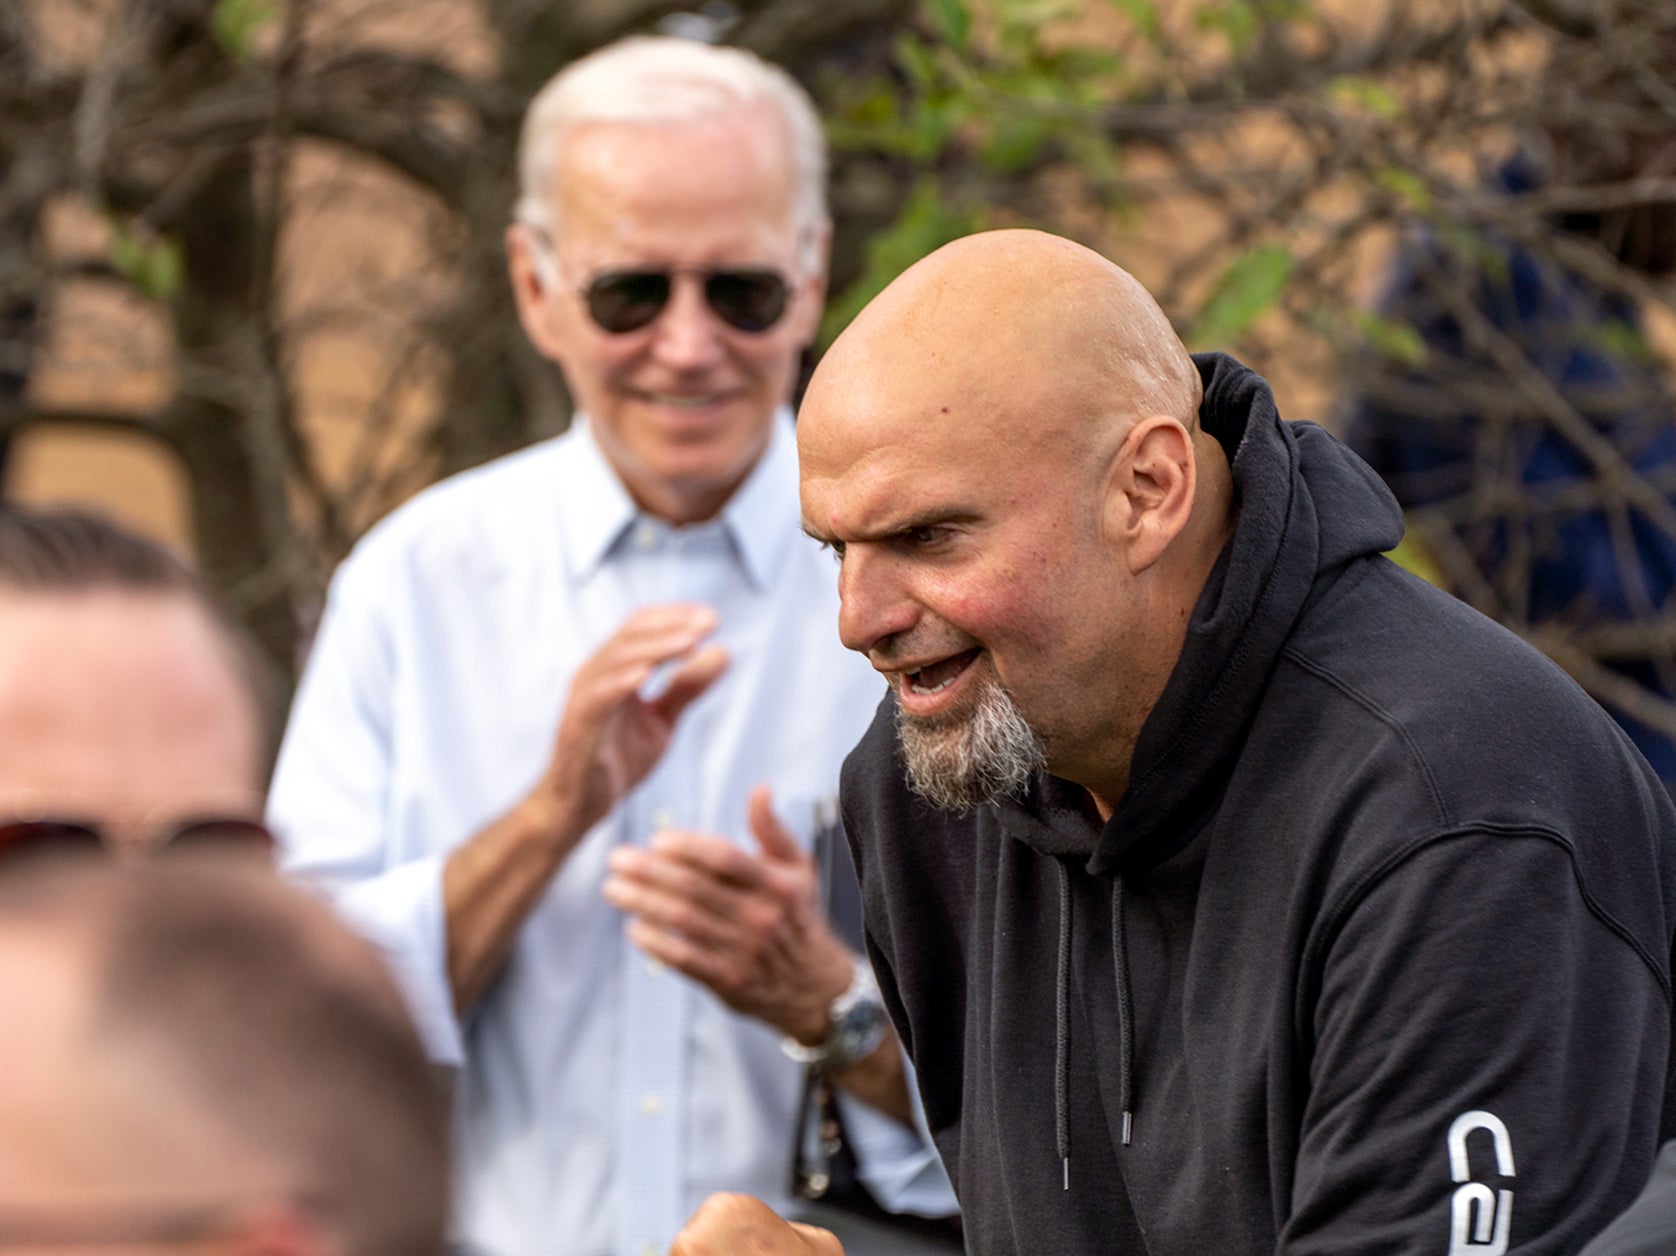 John Fetterman recently appeared at an event with Joe Biden